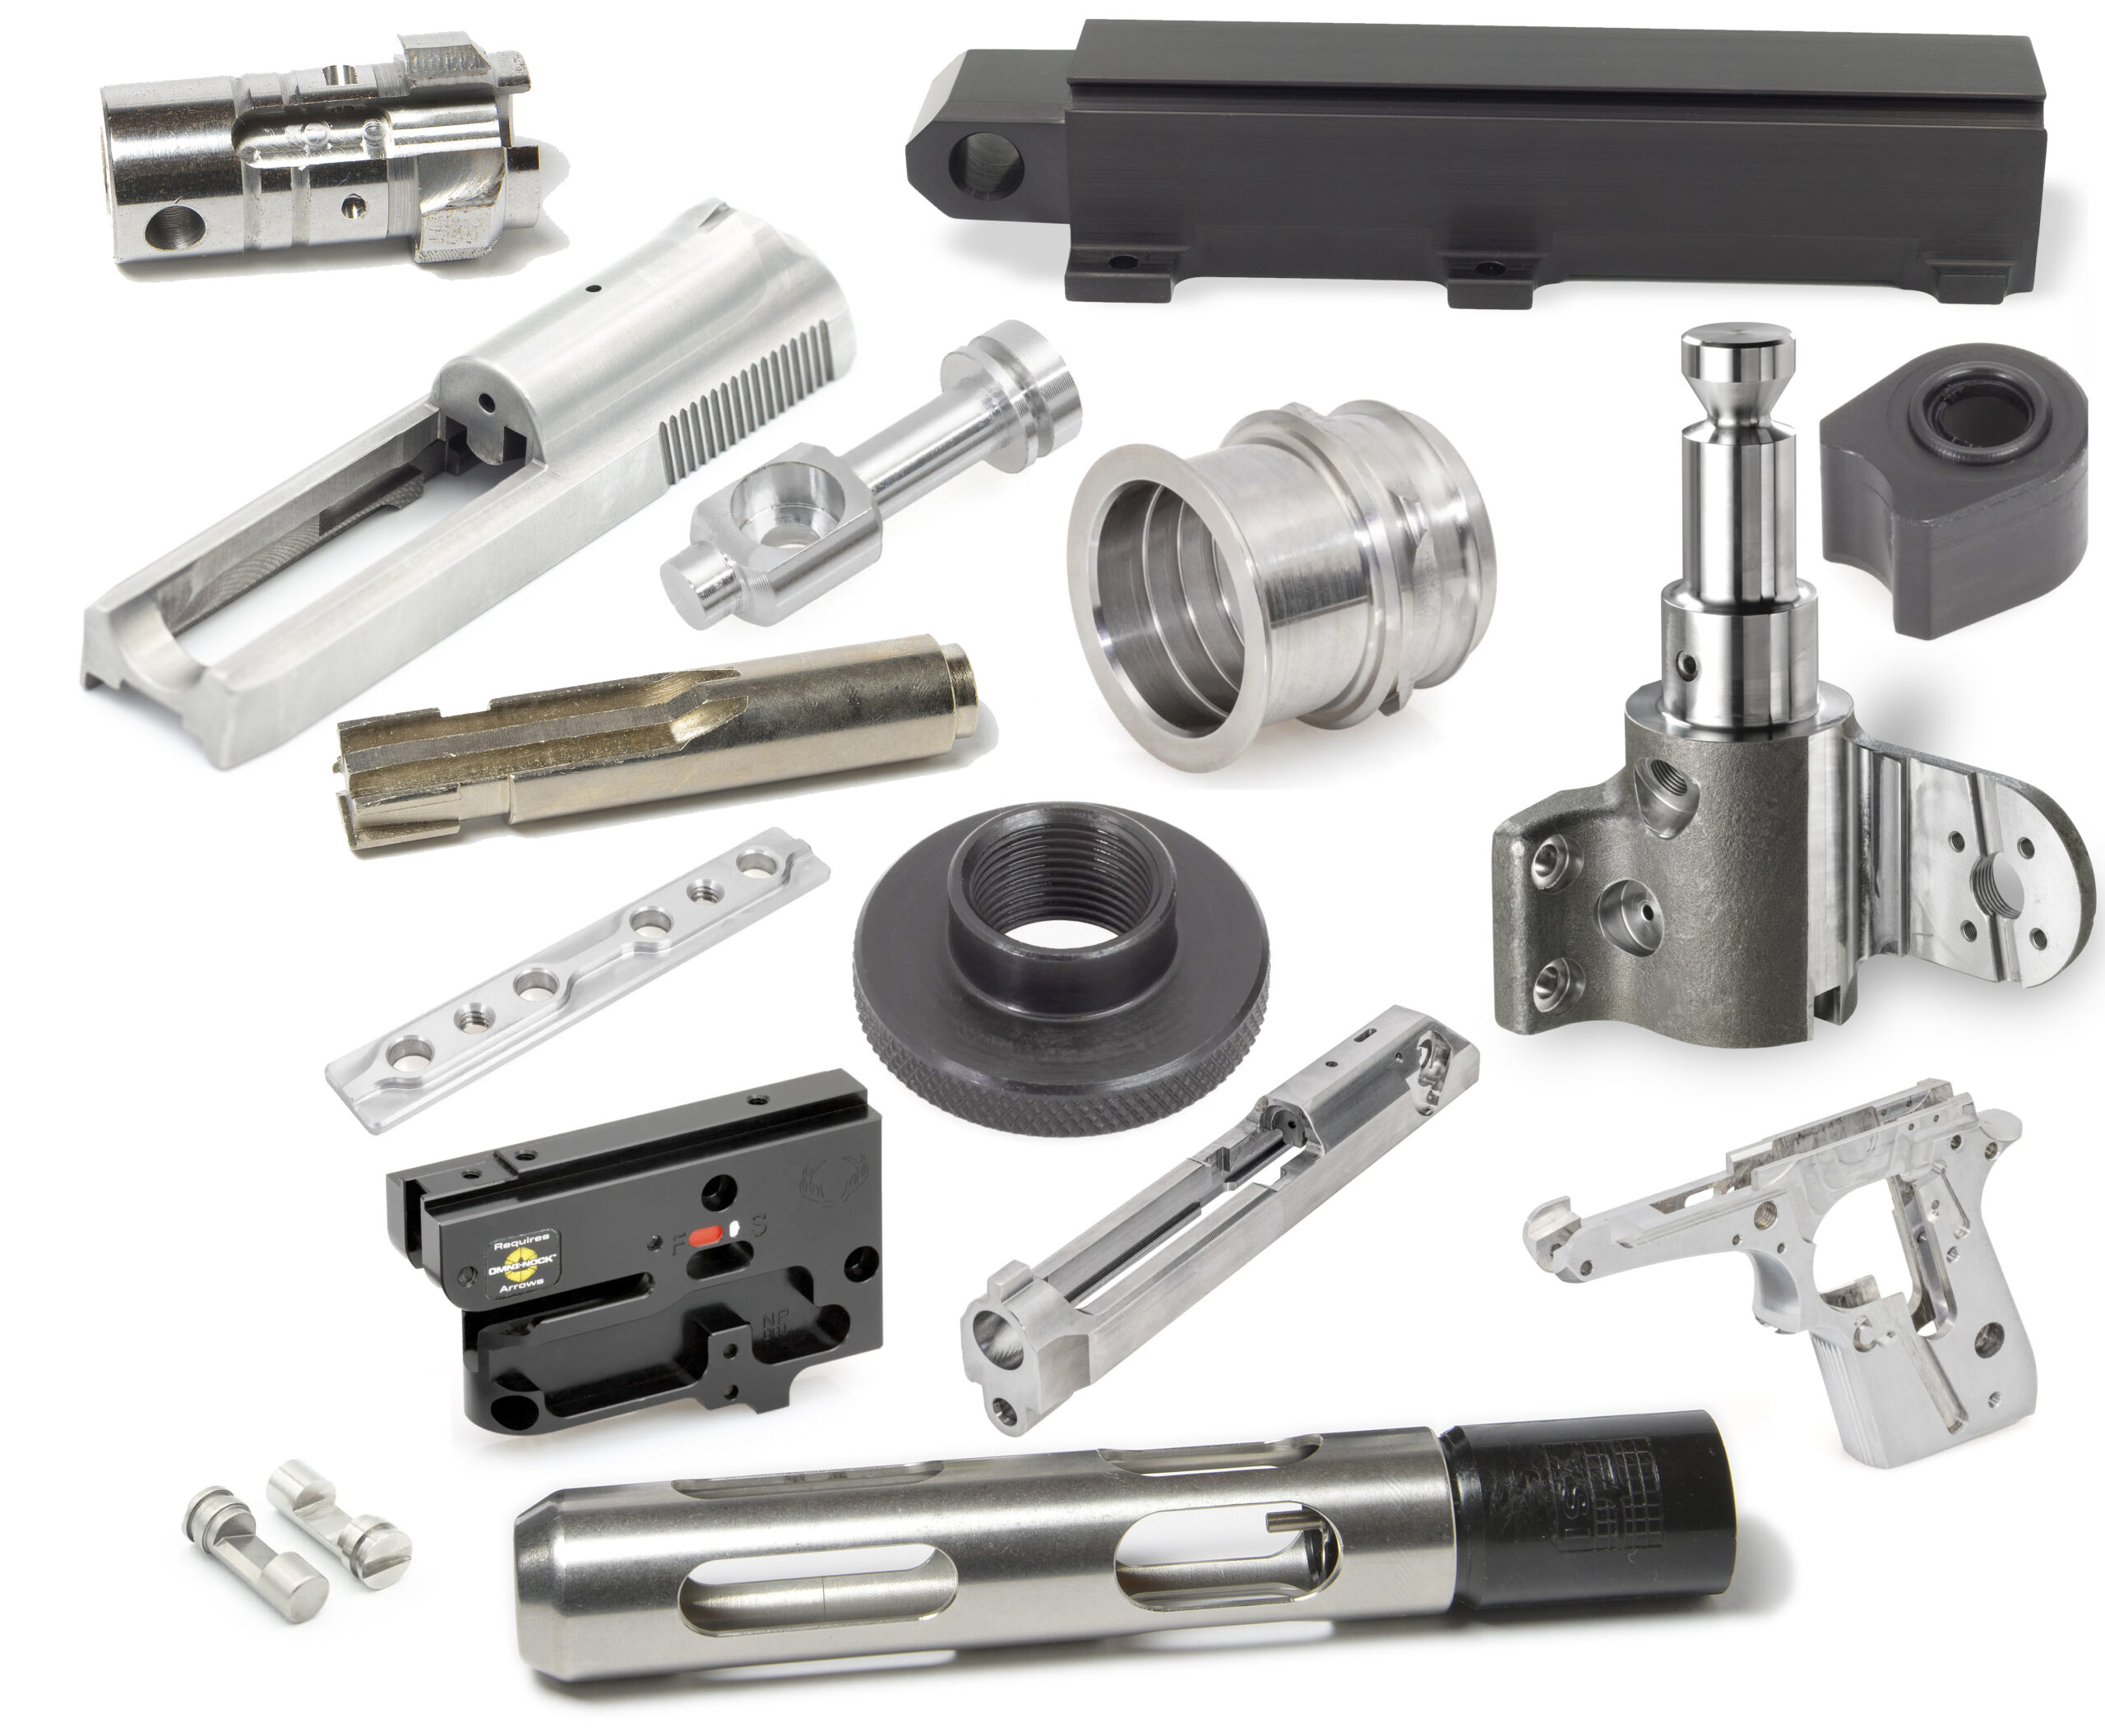 Precision manufactured firearm parts